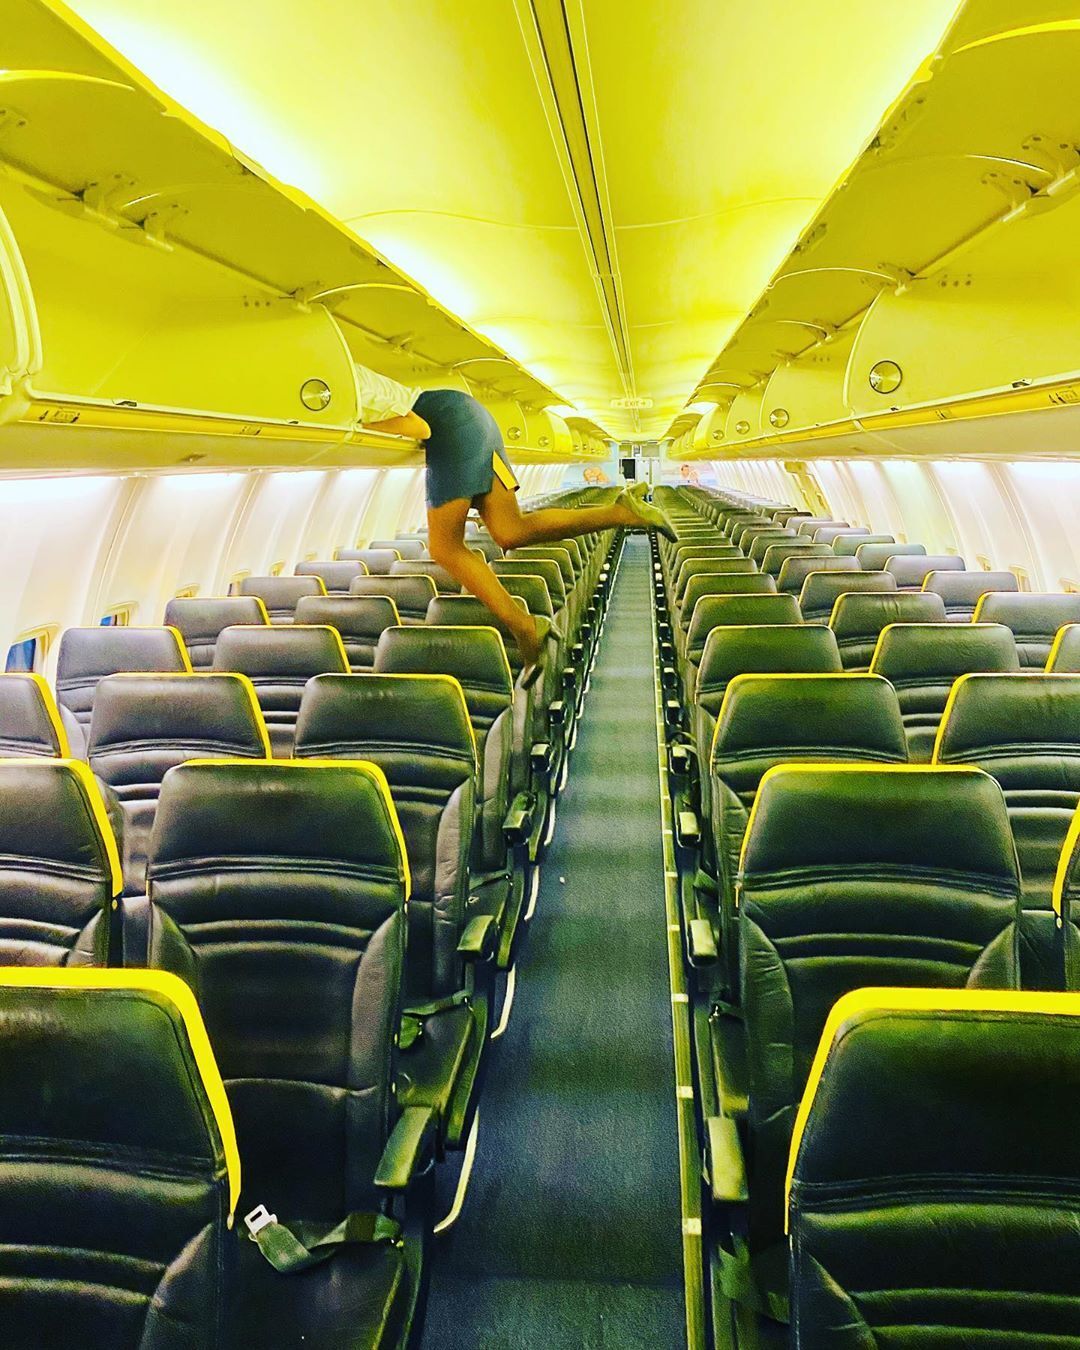 Стюардеса пікантно позує на камеру (Instagram flo.oprea)